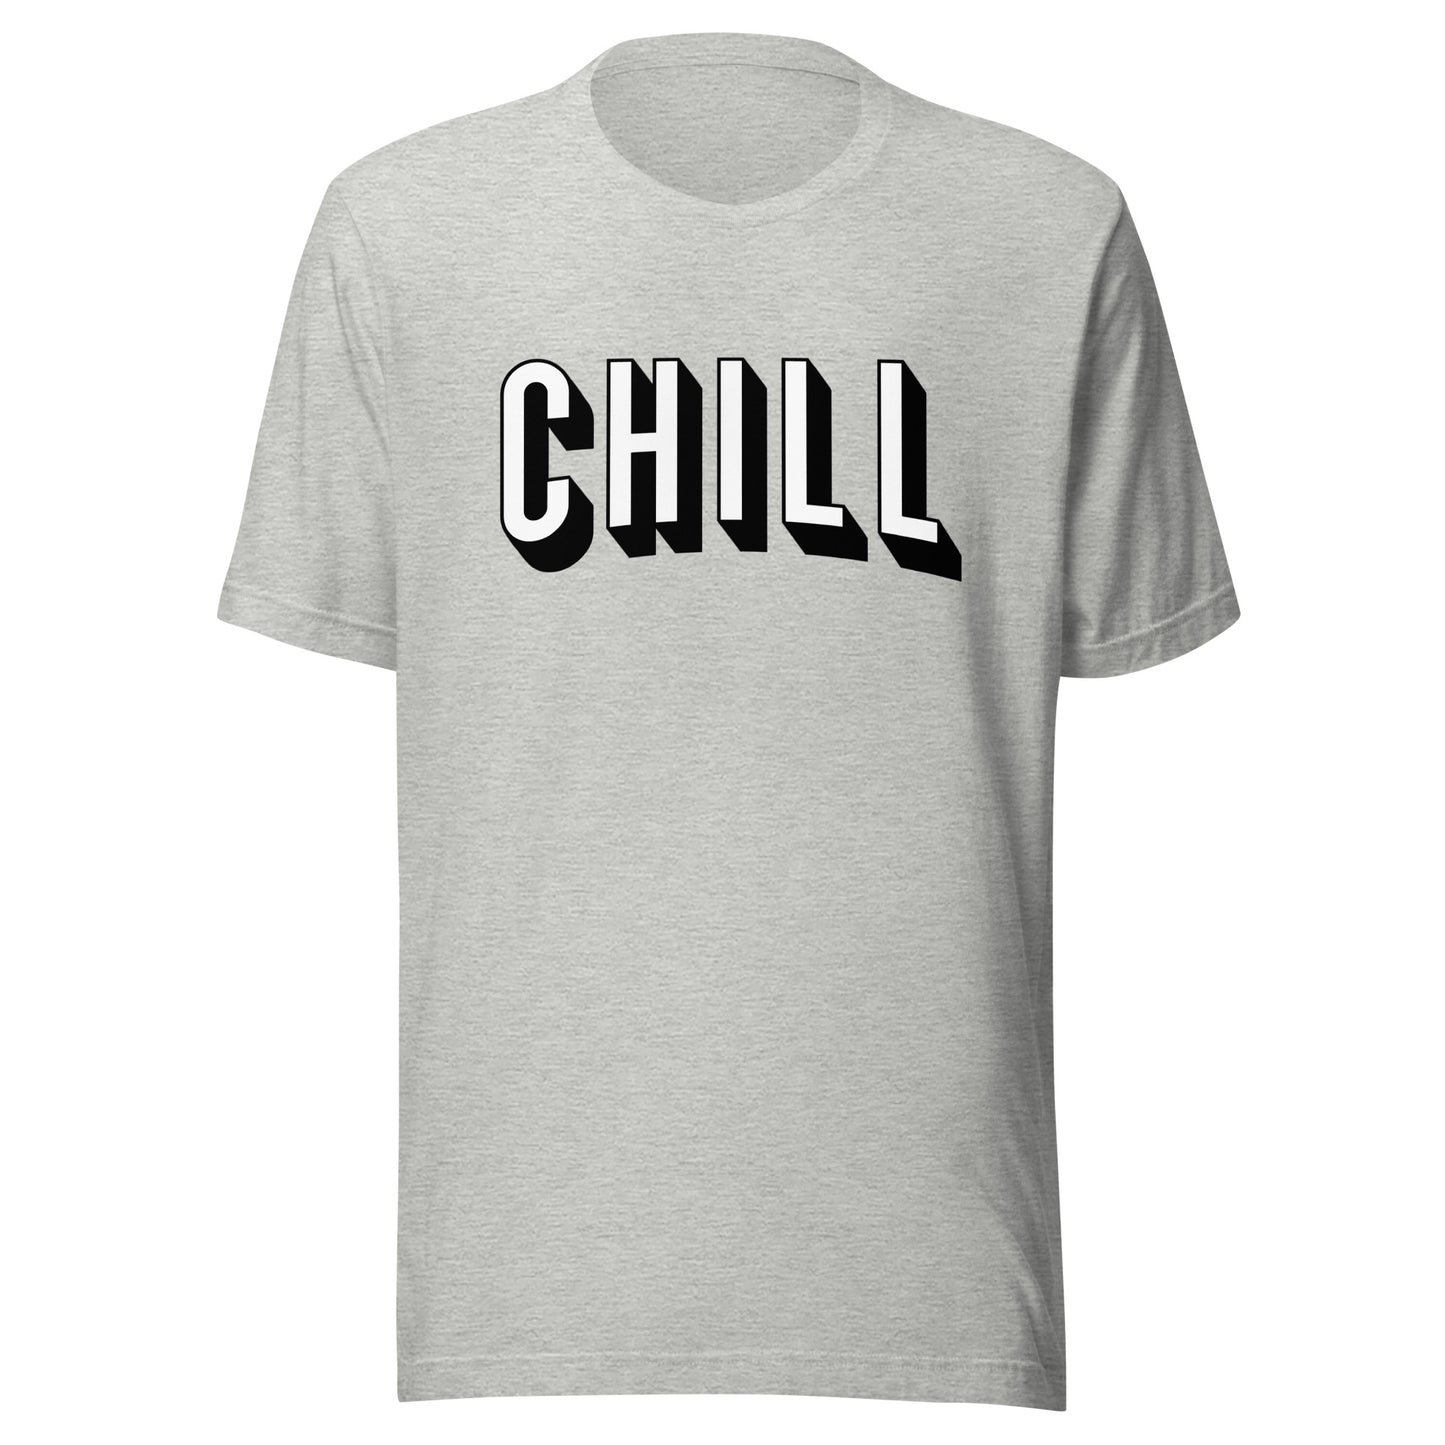 "Chill" Unisex t-shirt